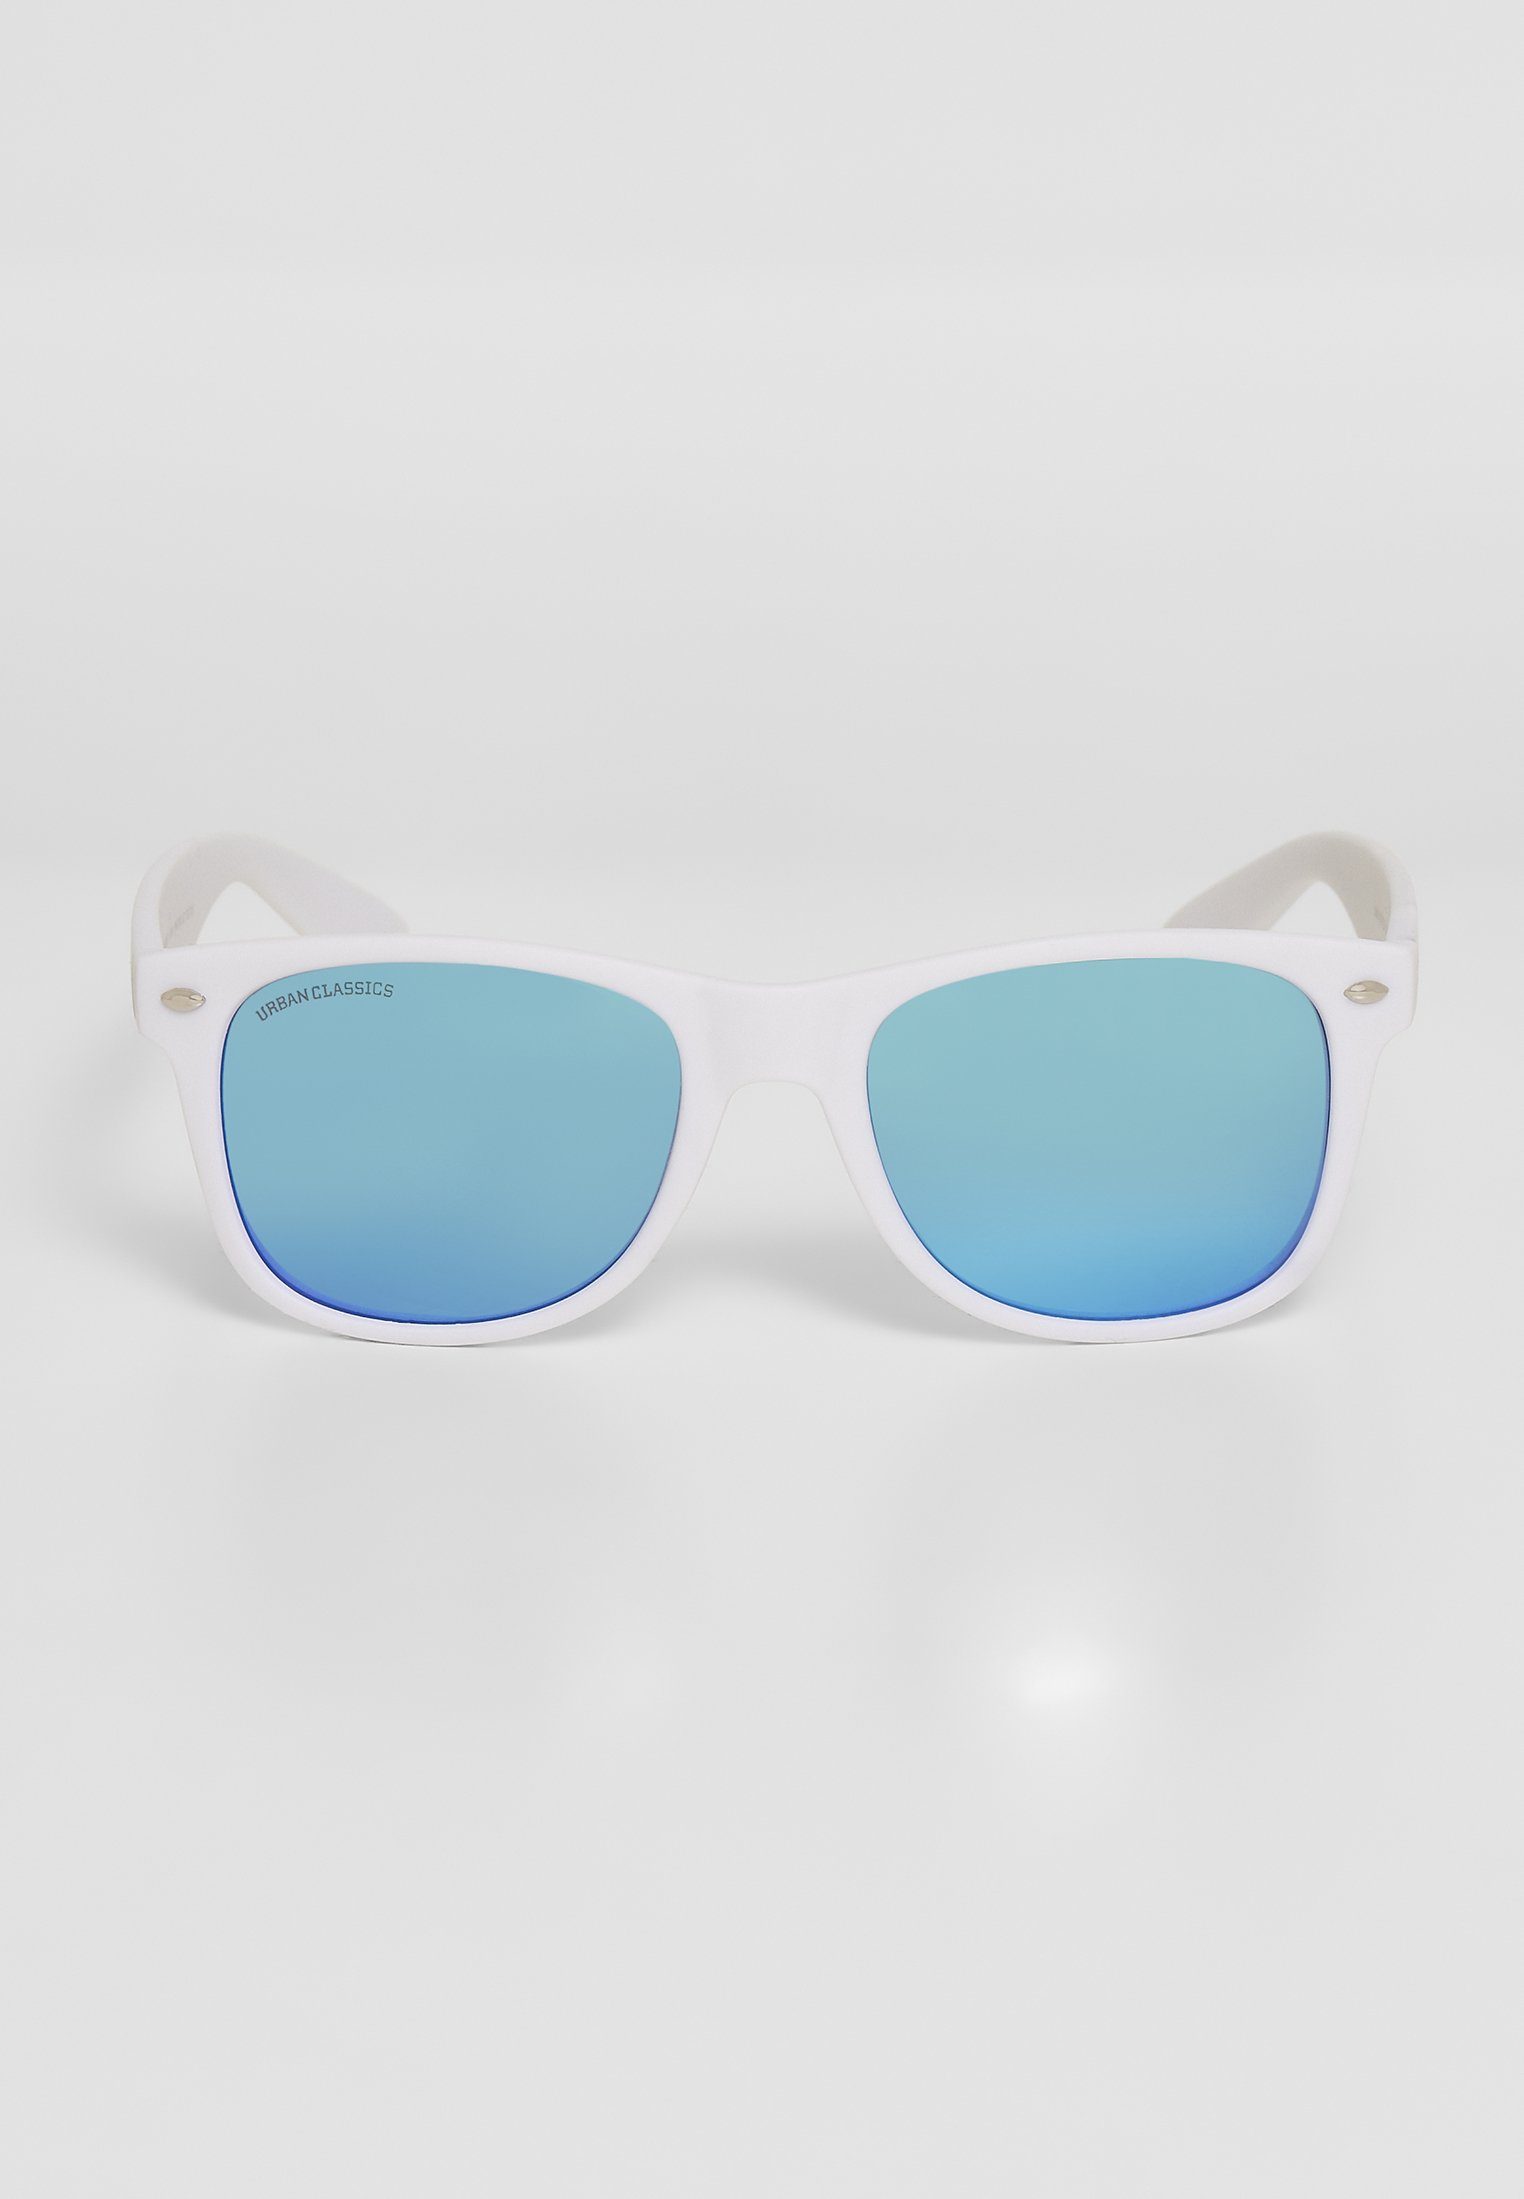 Accessoires UC Mirror Sunglasses white/blue URBAN Likoma CLASSICS Sonnenbrille